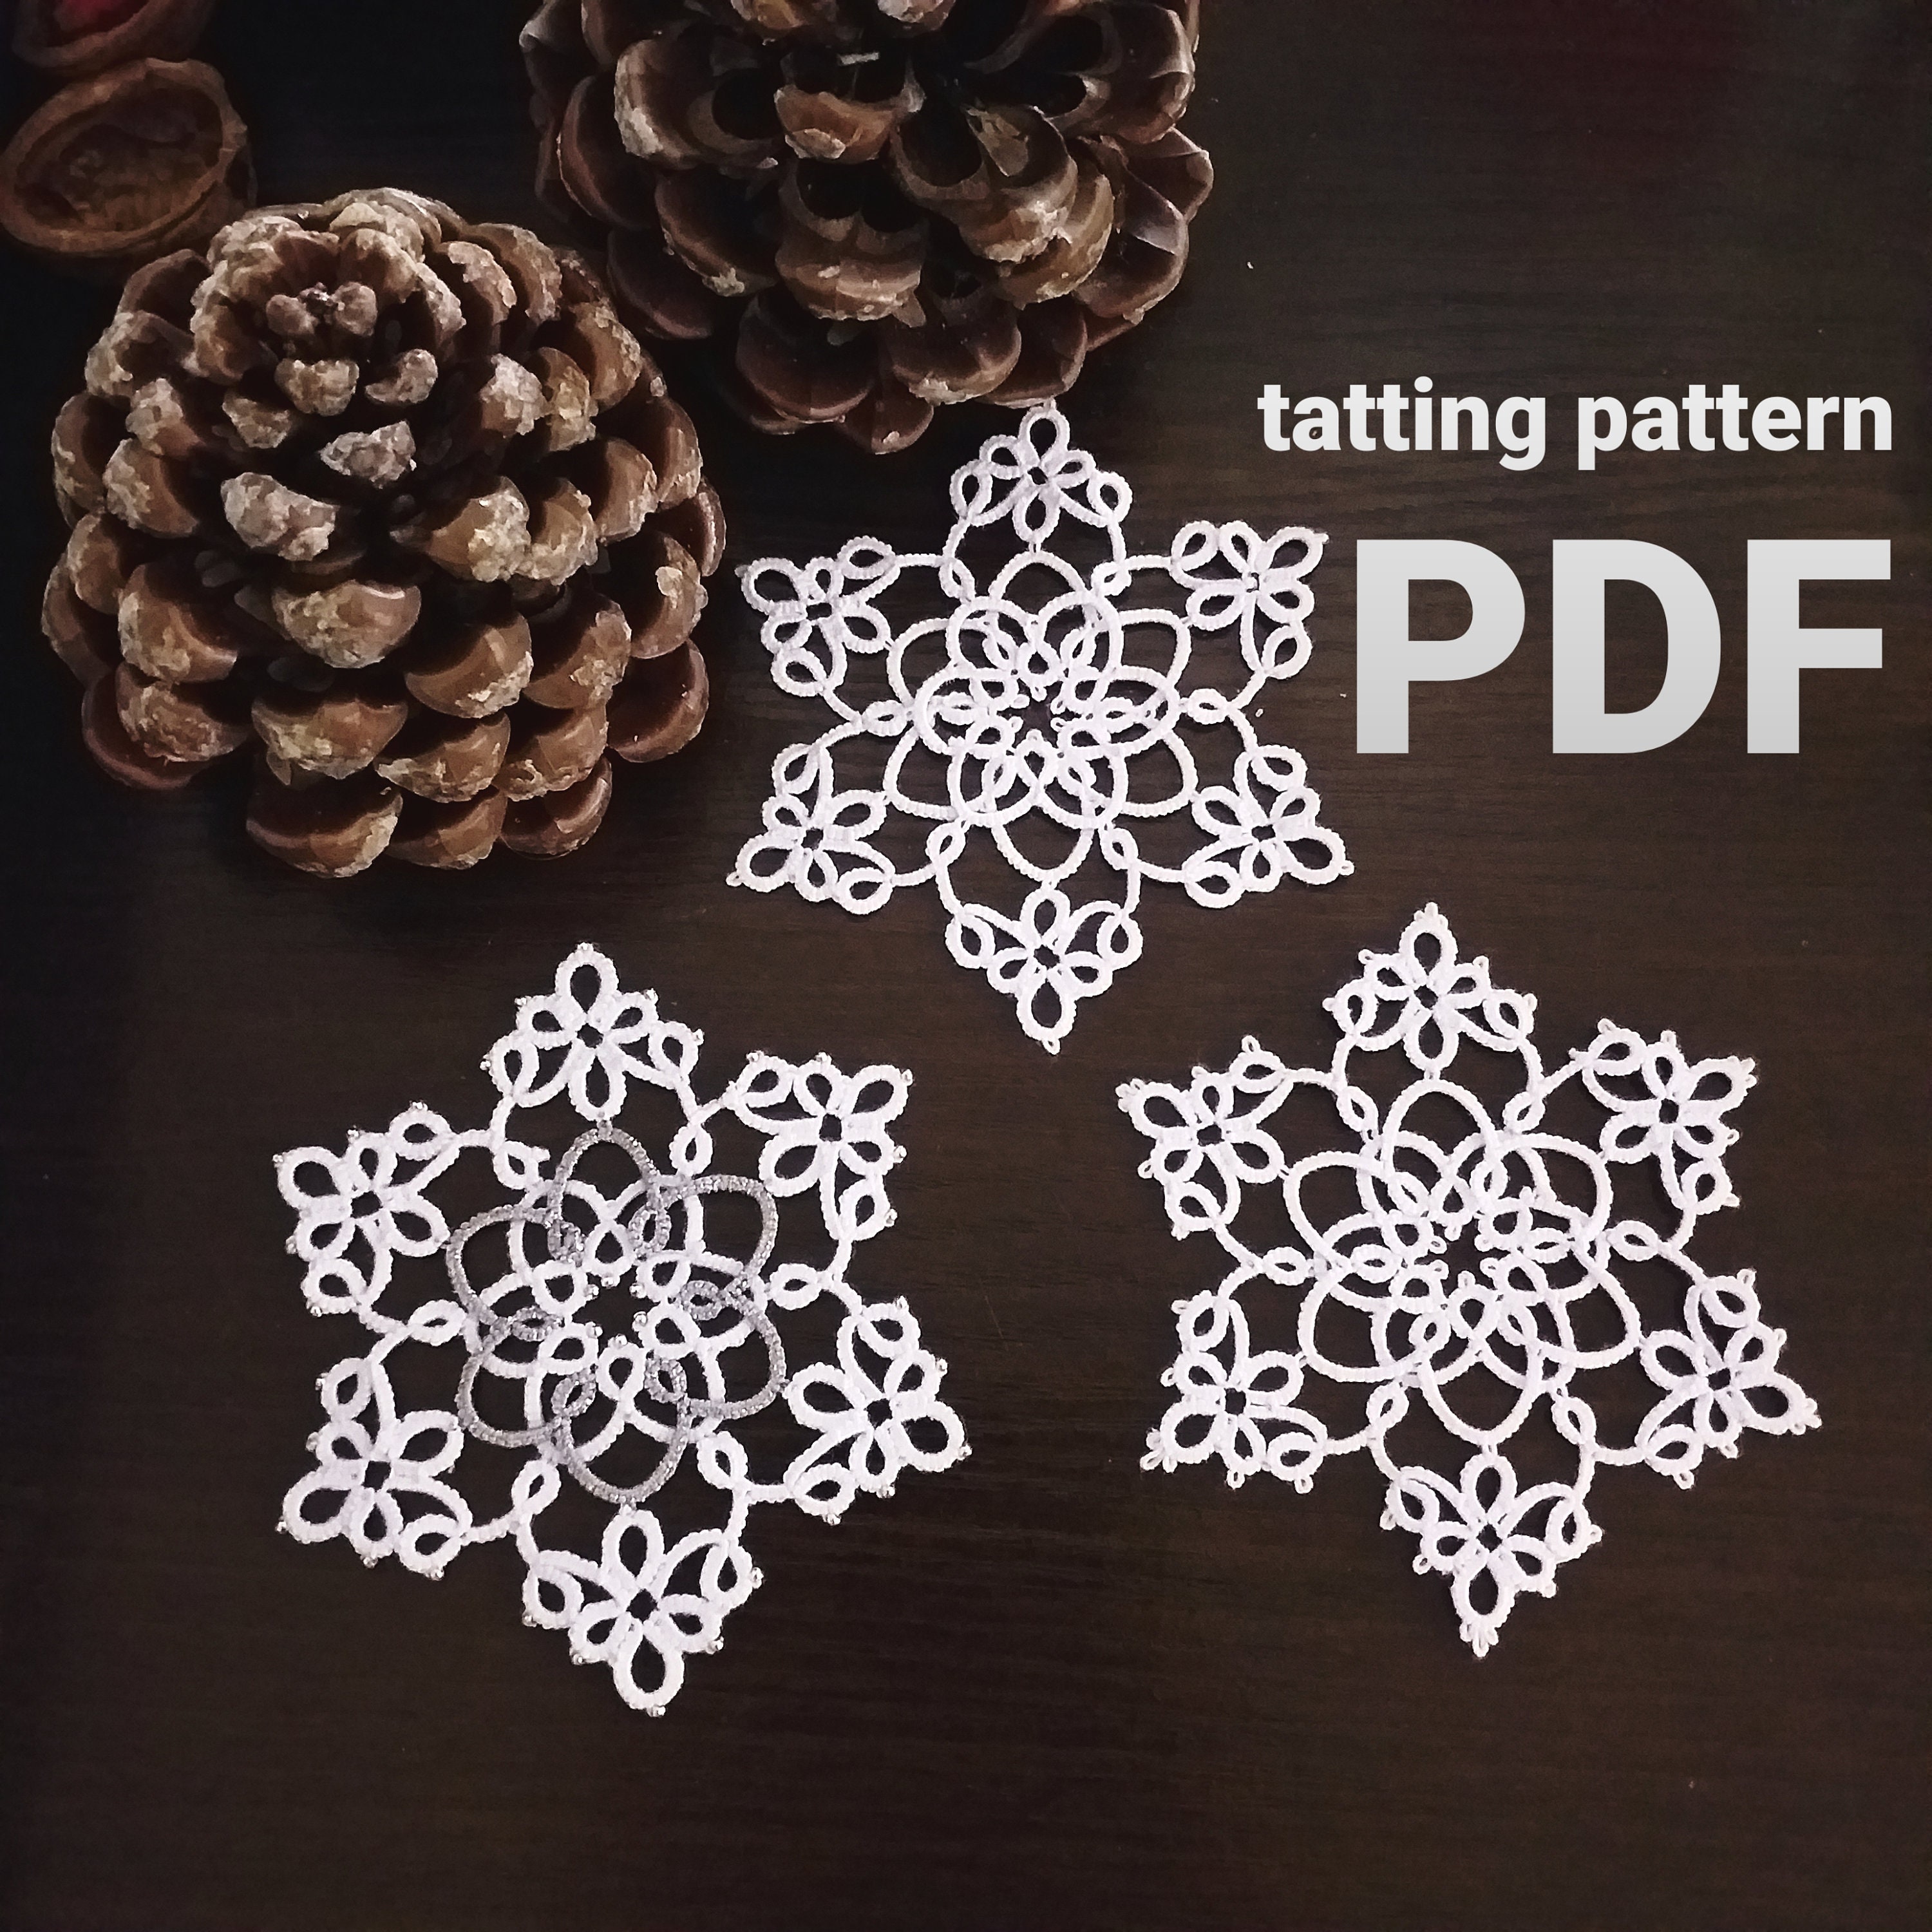 How to read tatting patterns - FairyLace - free tatting pattern snowflake